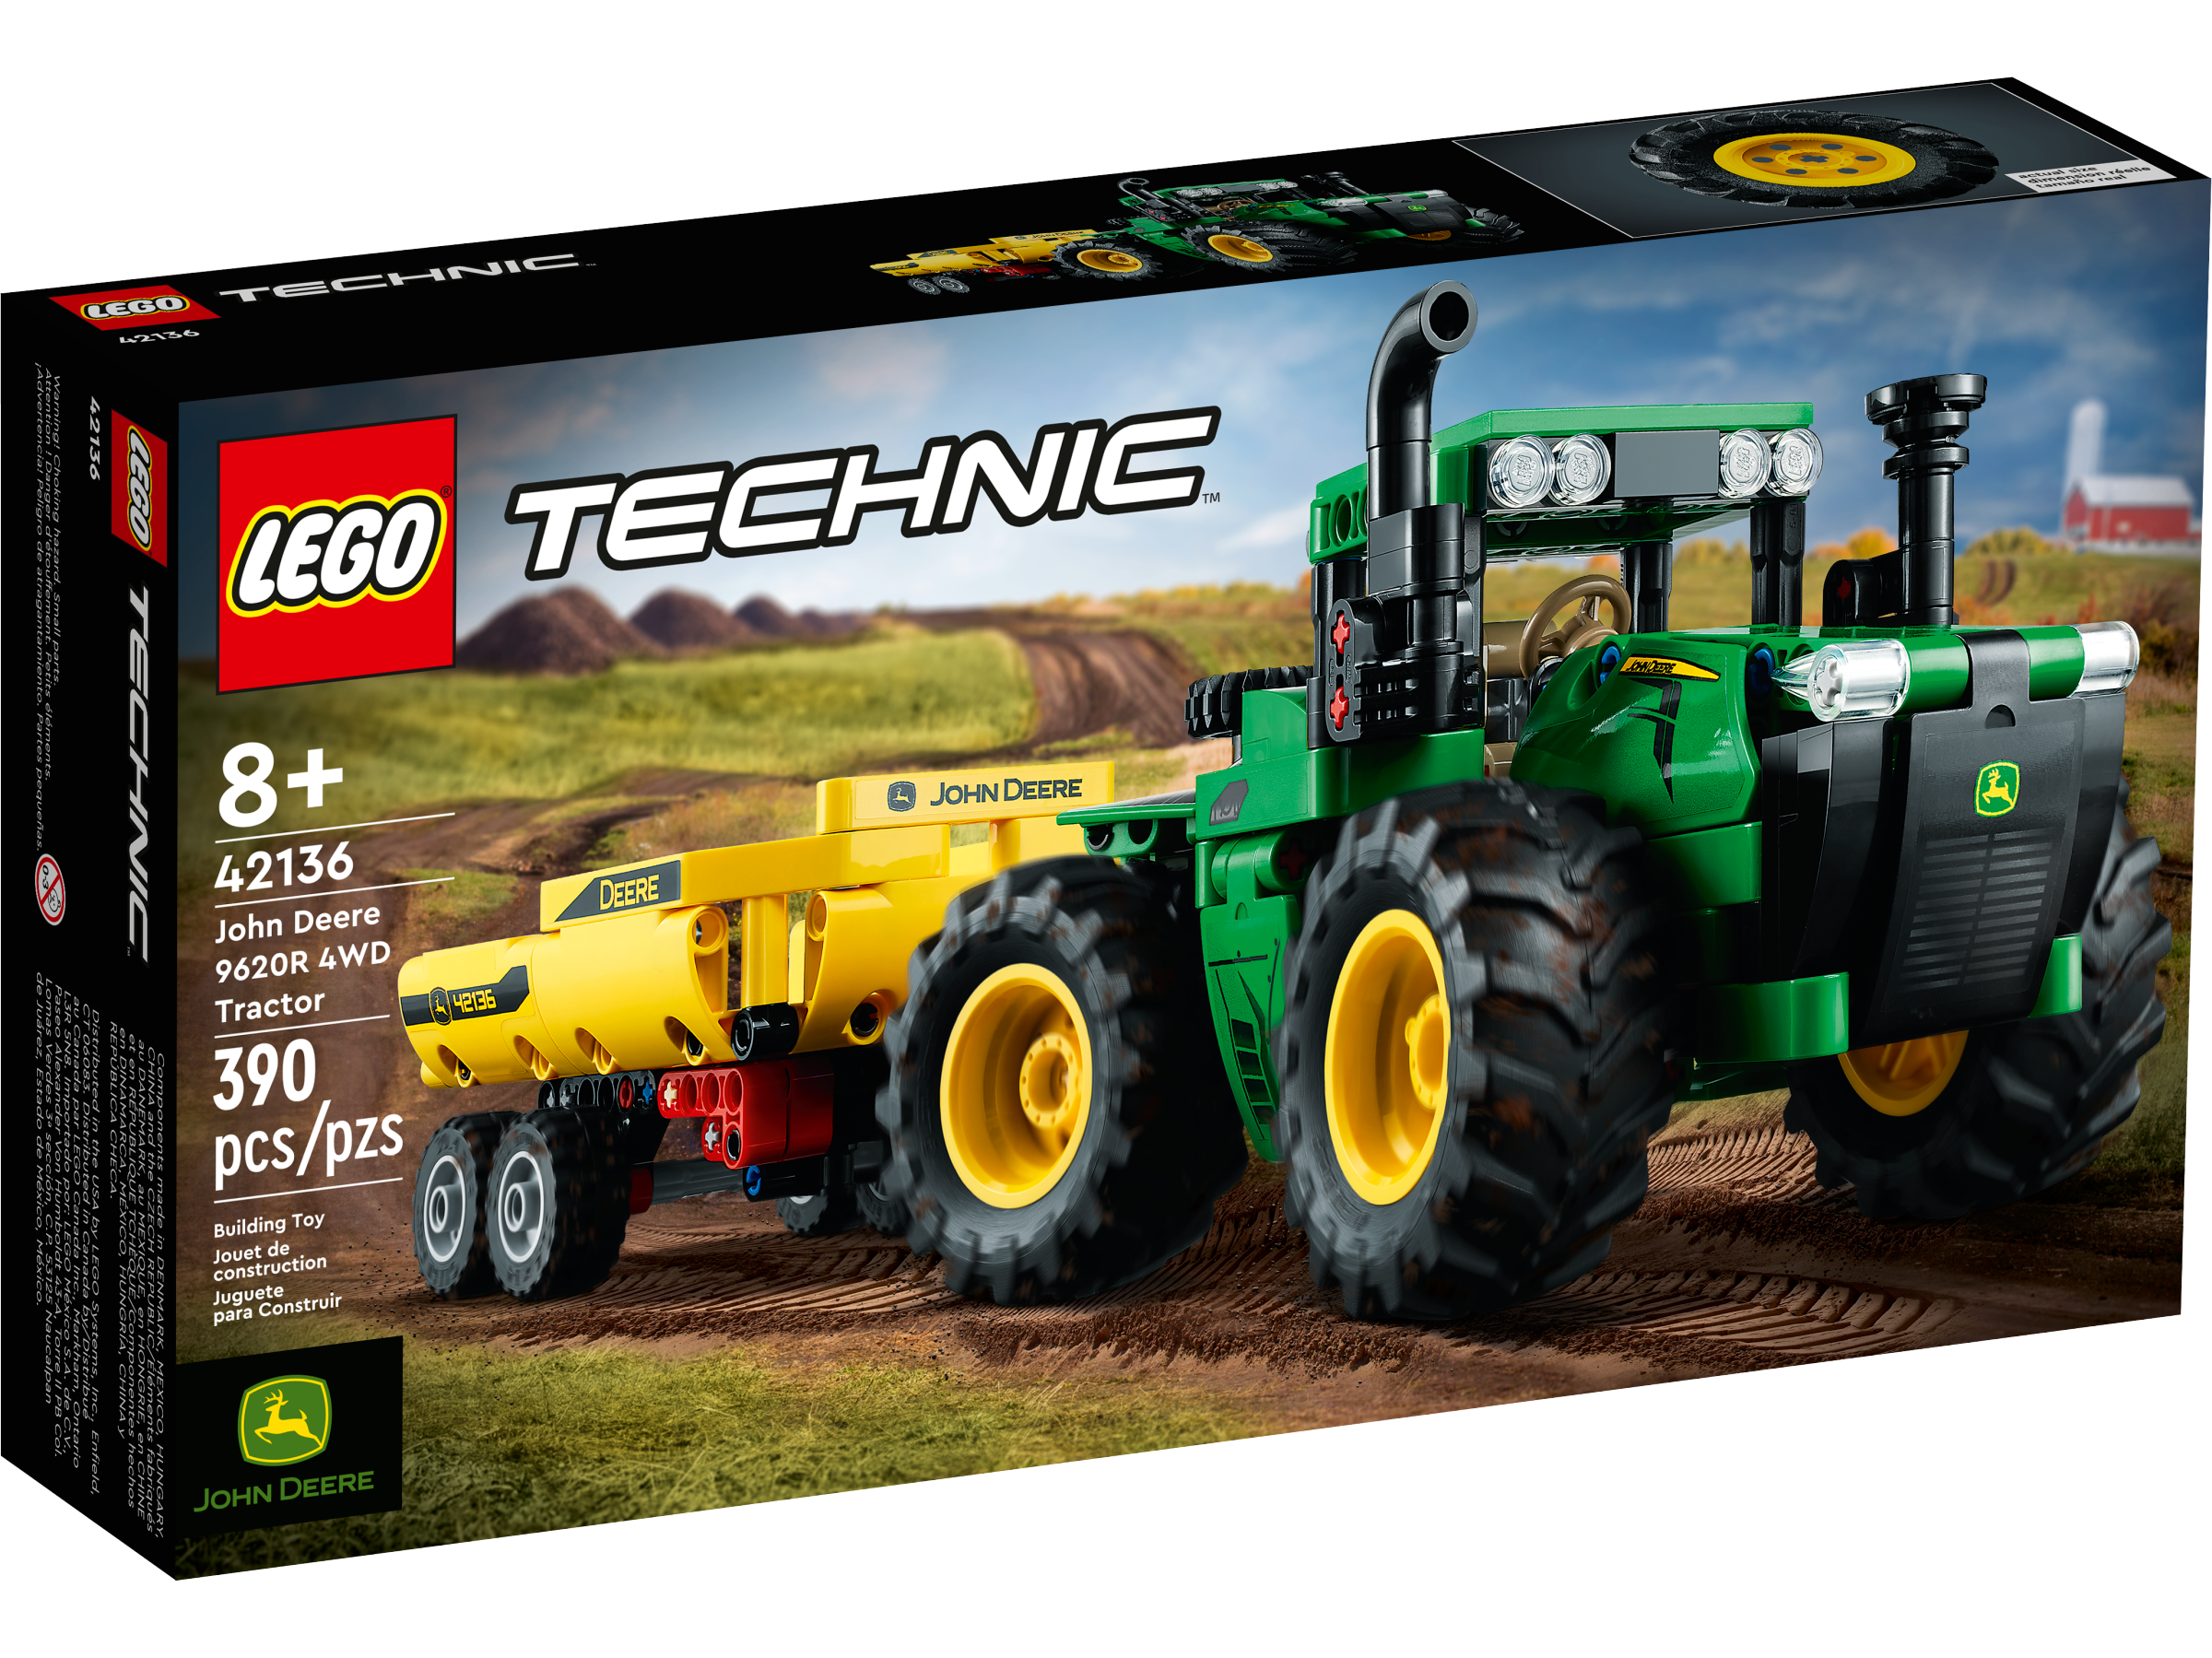 John Deere 9620R 4WD Tractor 42136 | Technic™ | Buy online at the